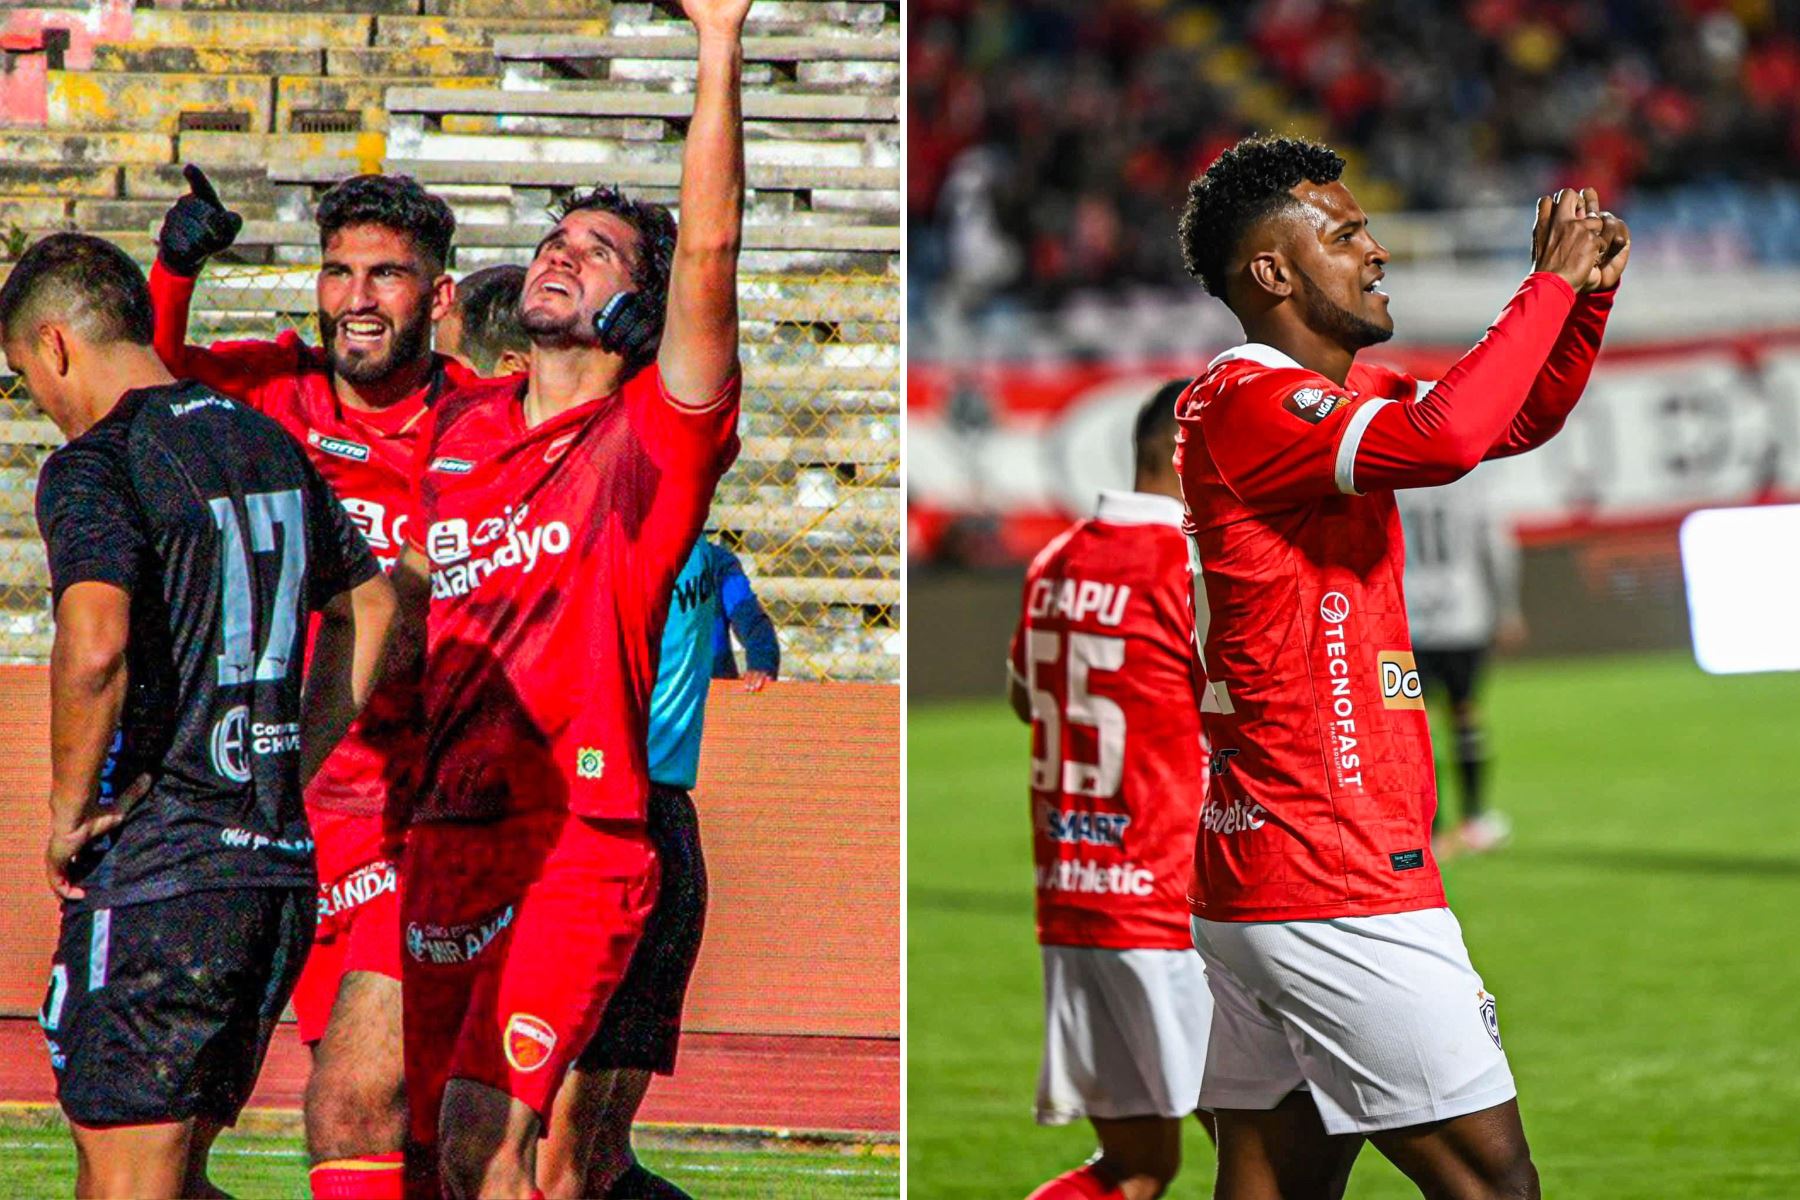 Sport Huancayo vs Cienciano